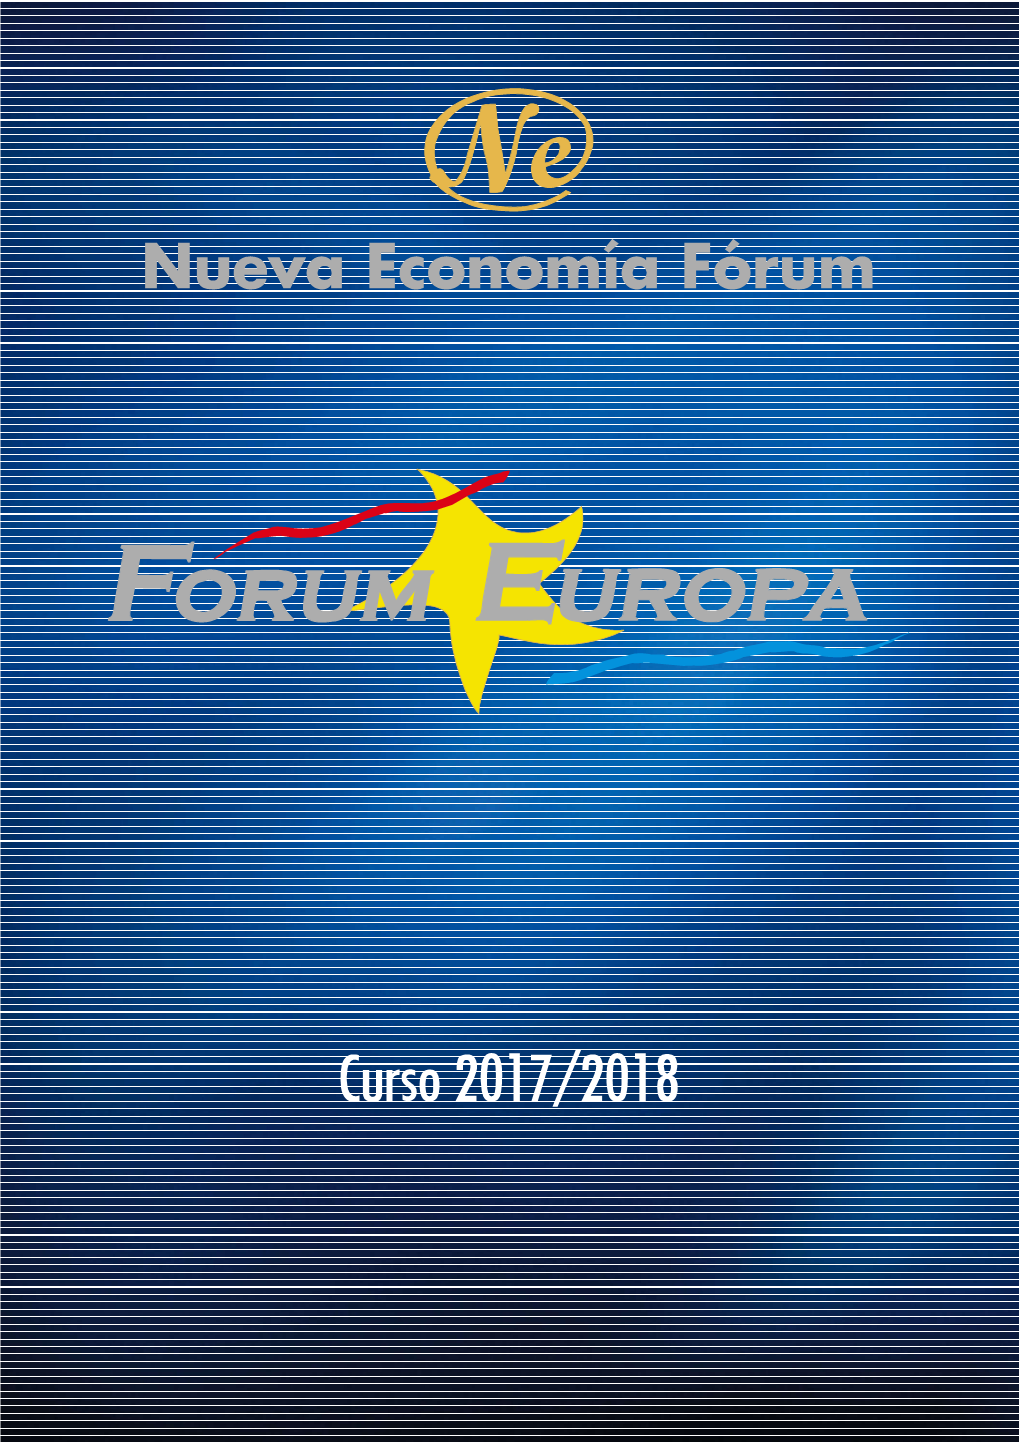 Fórum Europa 2017-2018